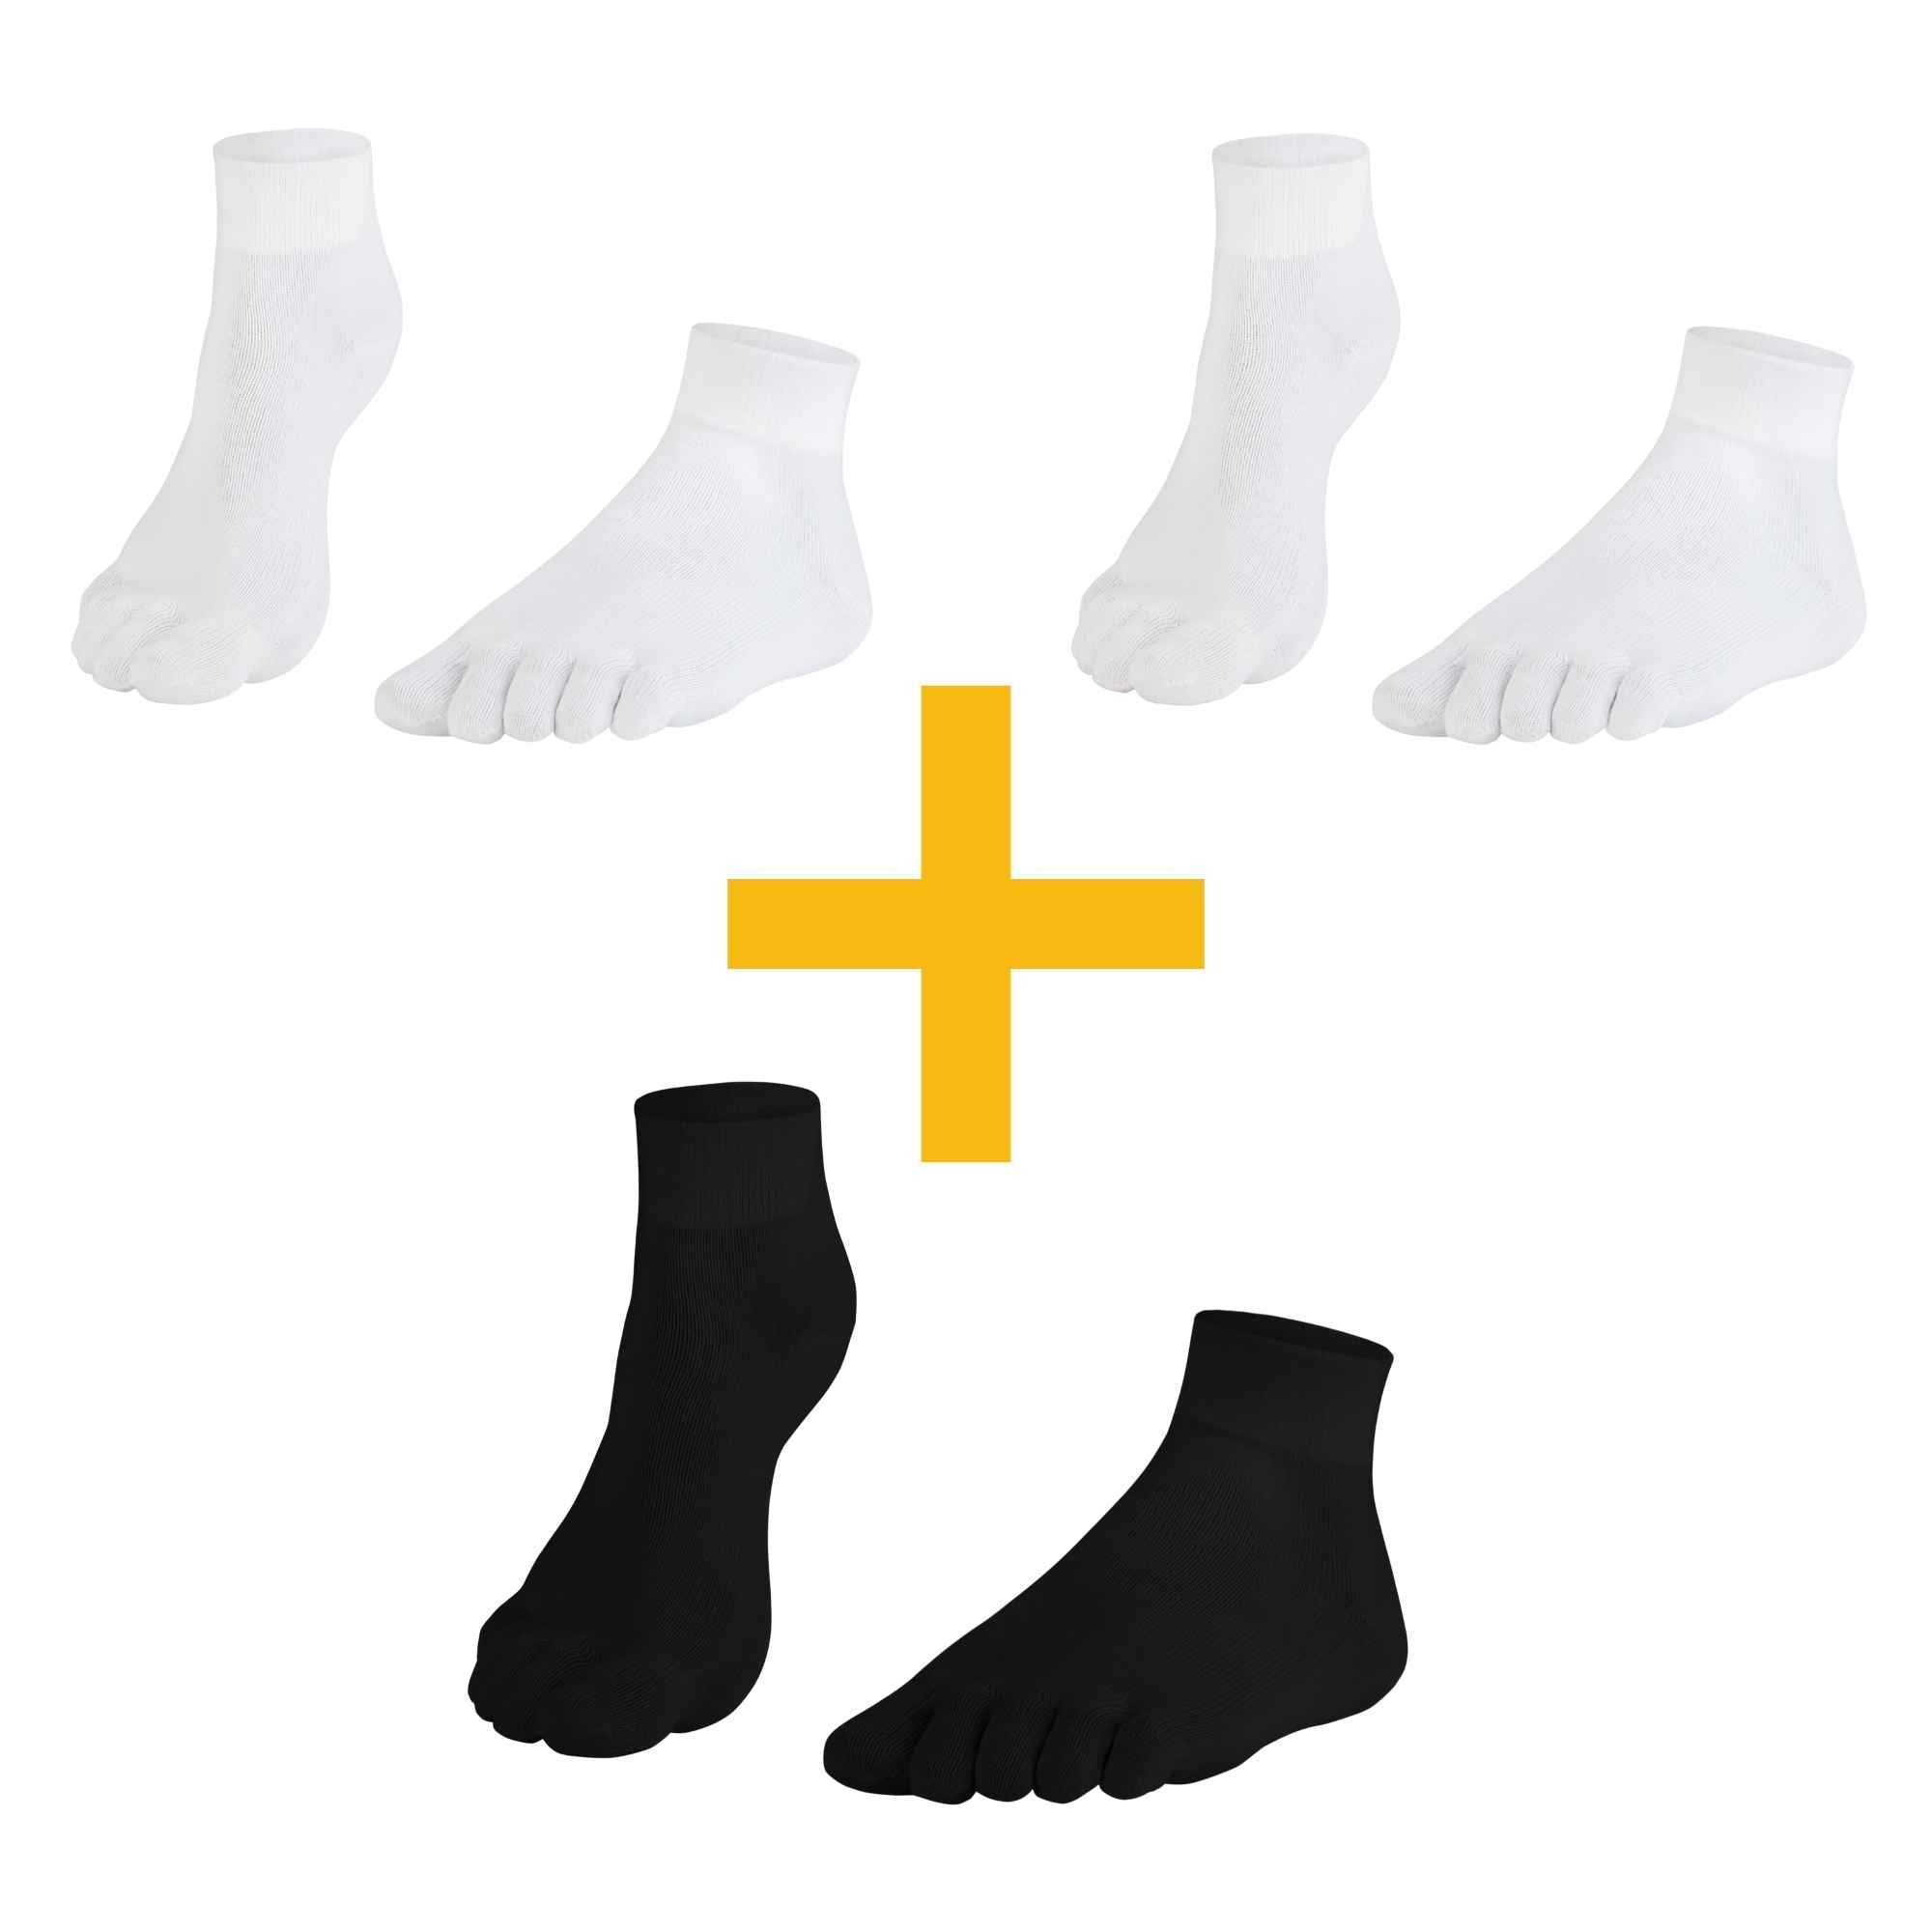 Silver Protect short socks, 3pcs economy pack - Knitido®.